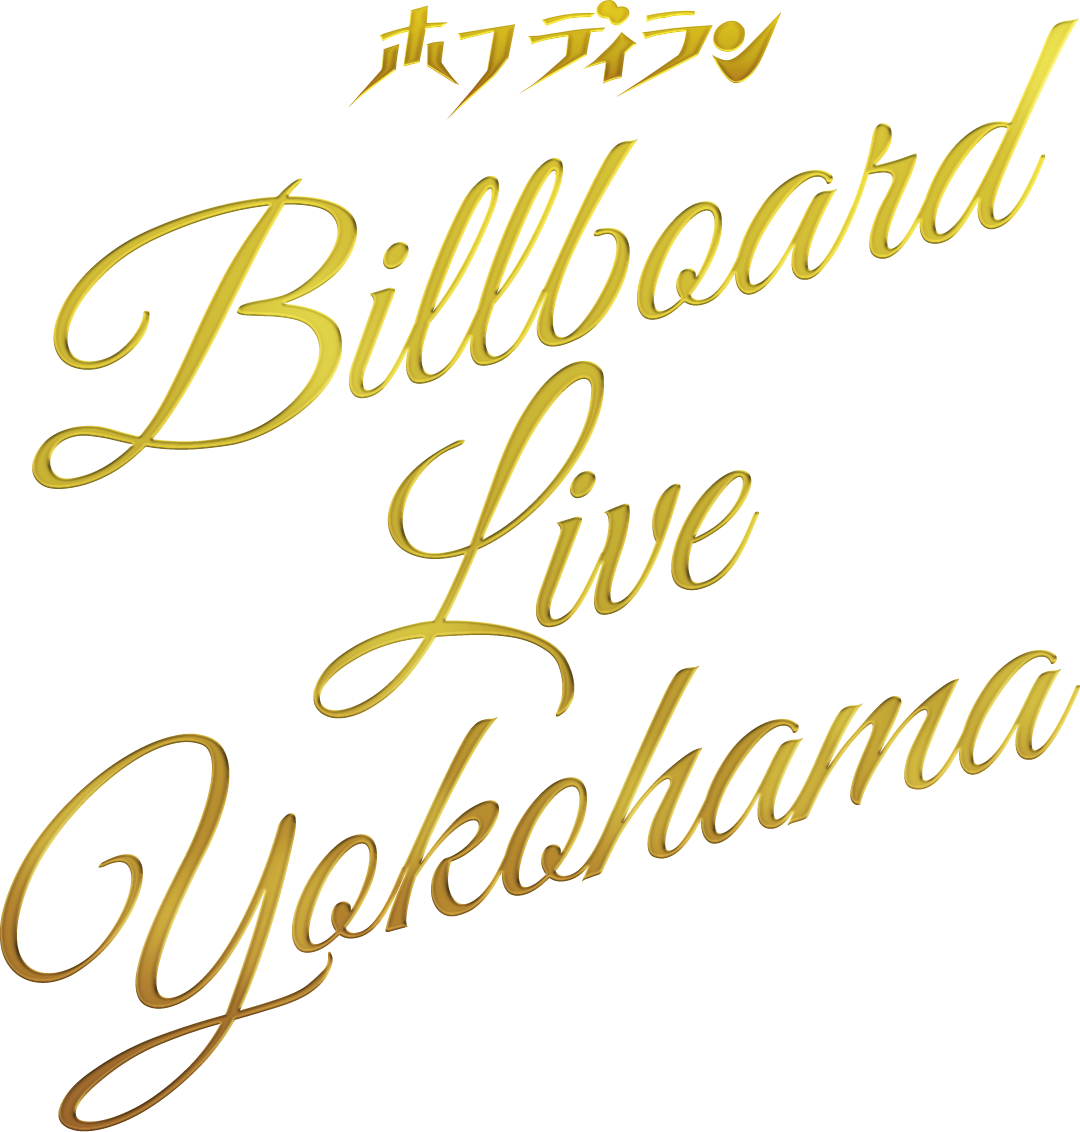 Billboard Live Yokohama